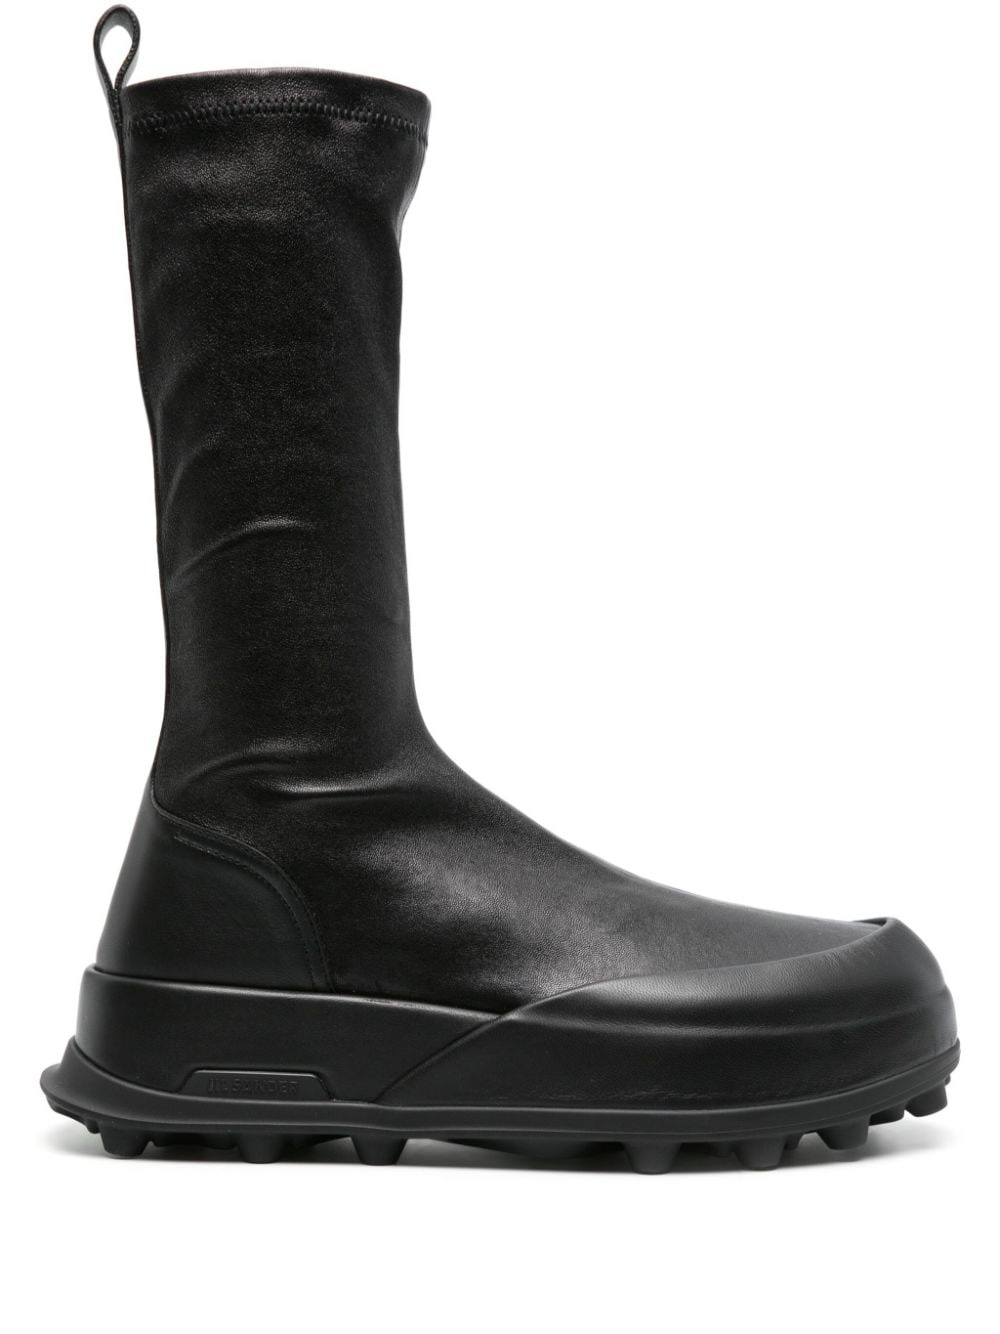 leather platform boots - 1